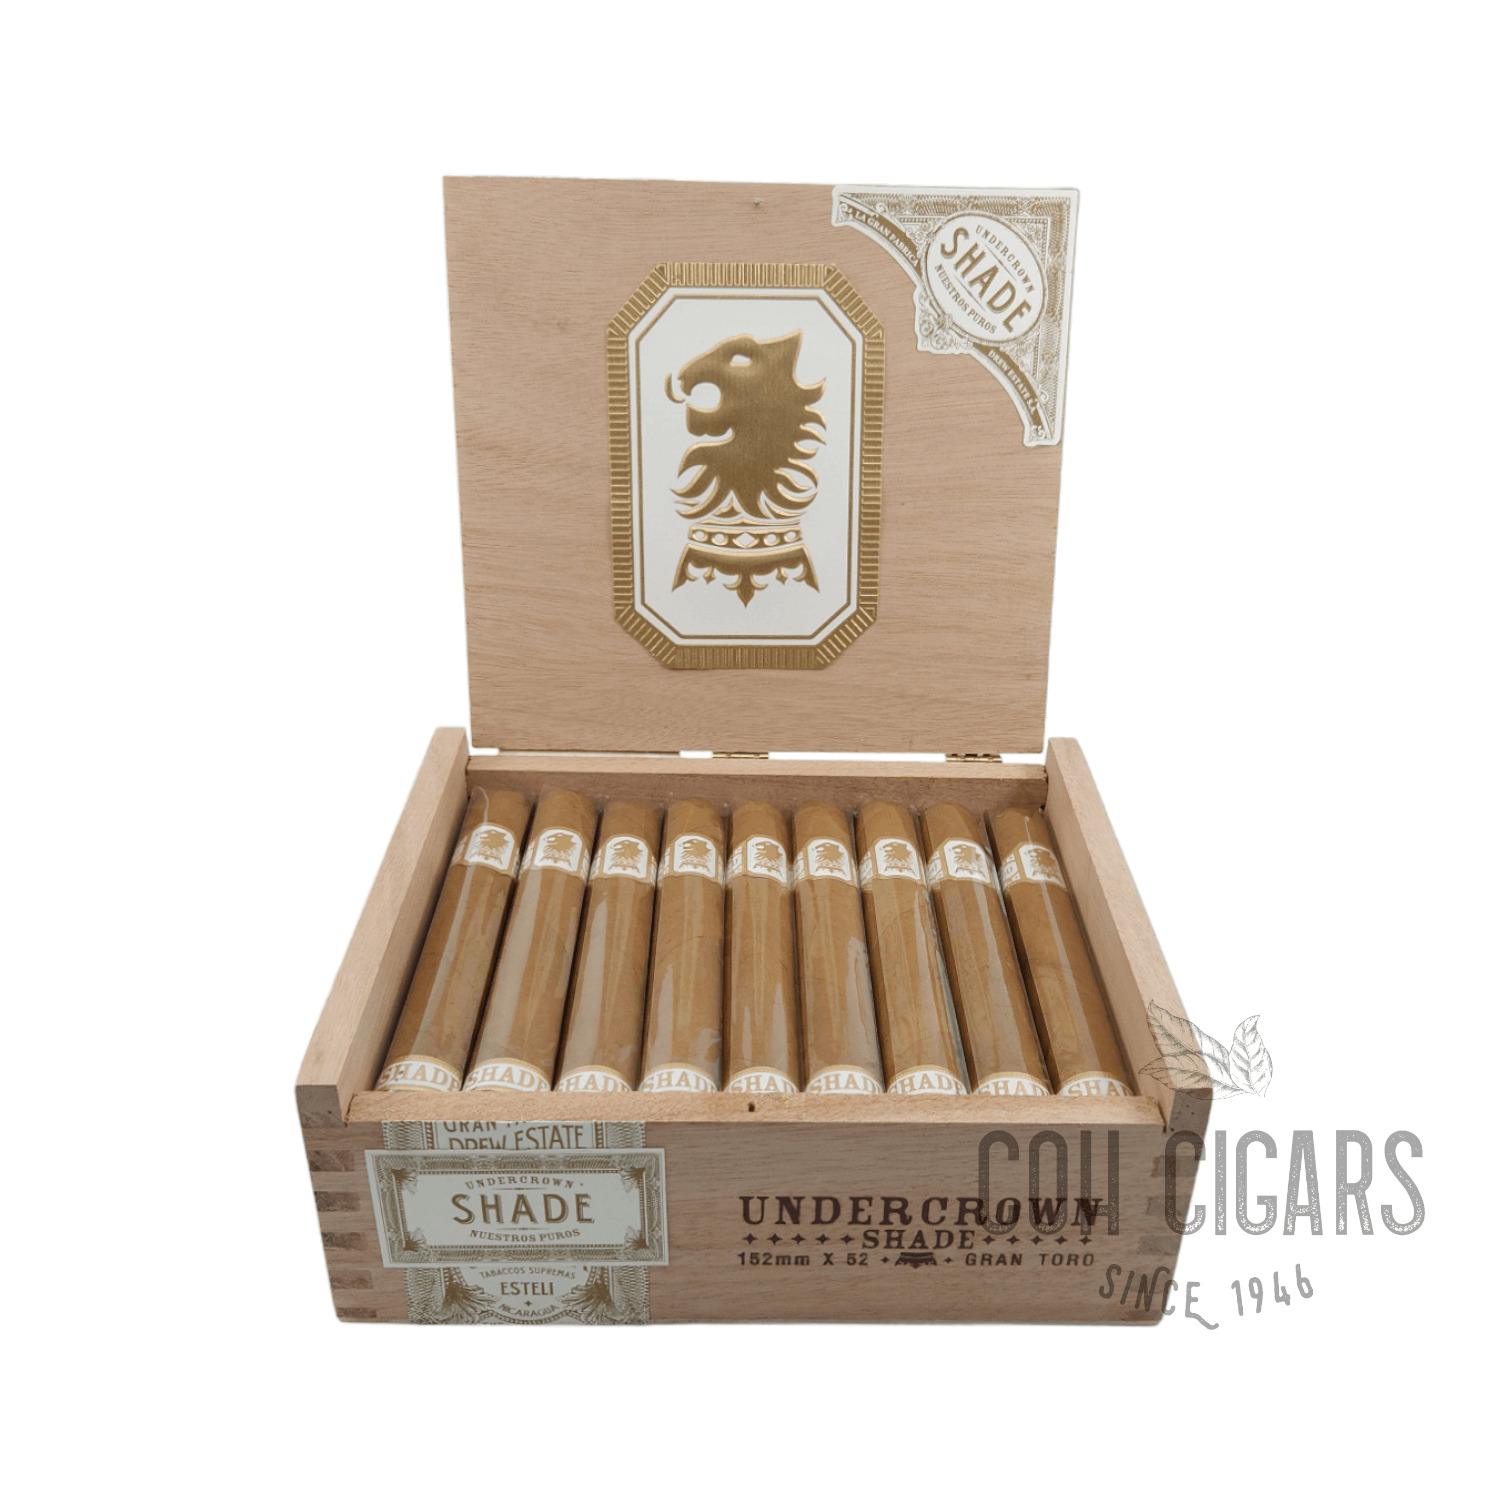 Drew Estate Cigar | Liga Undercrown Shade Gran Toro | Box 25 - hk.cohcigars